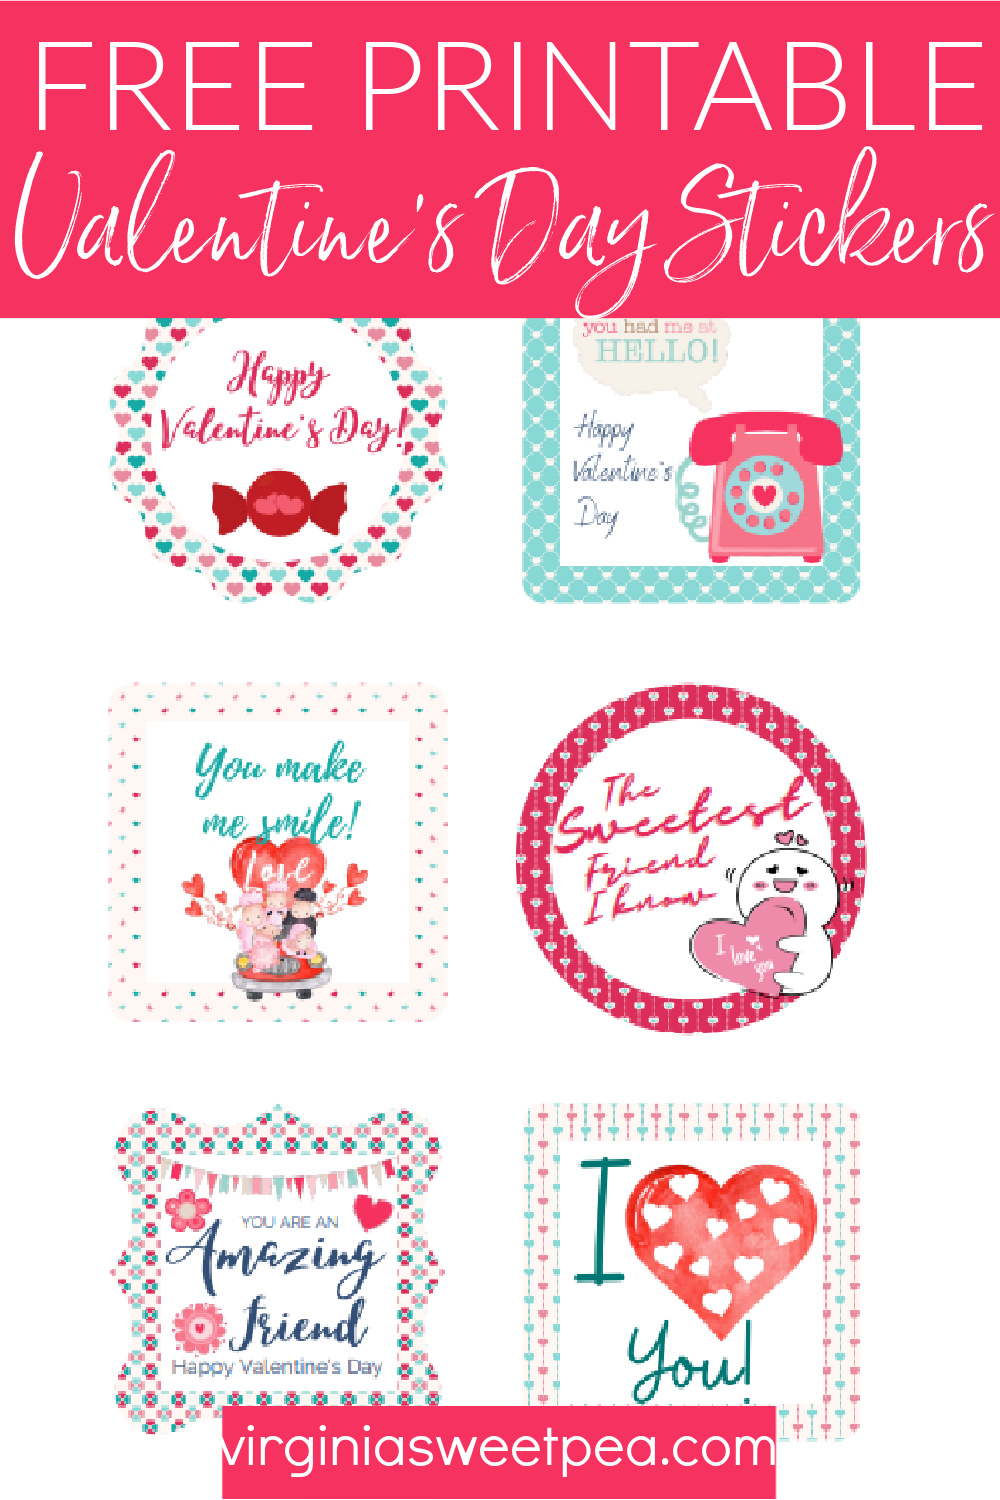 Free Printable Valentine's Day Stickers